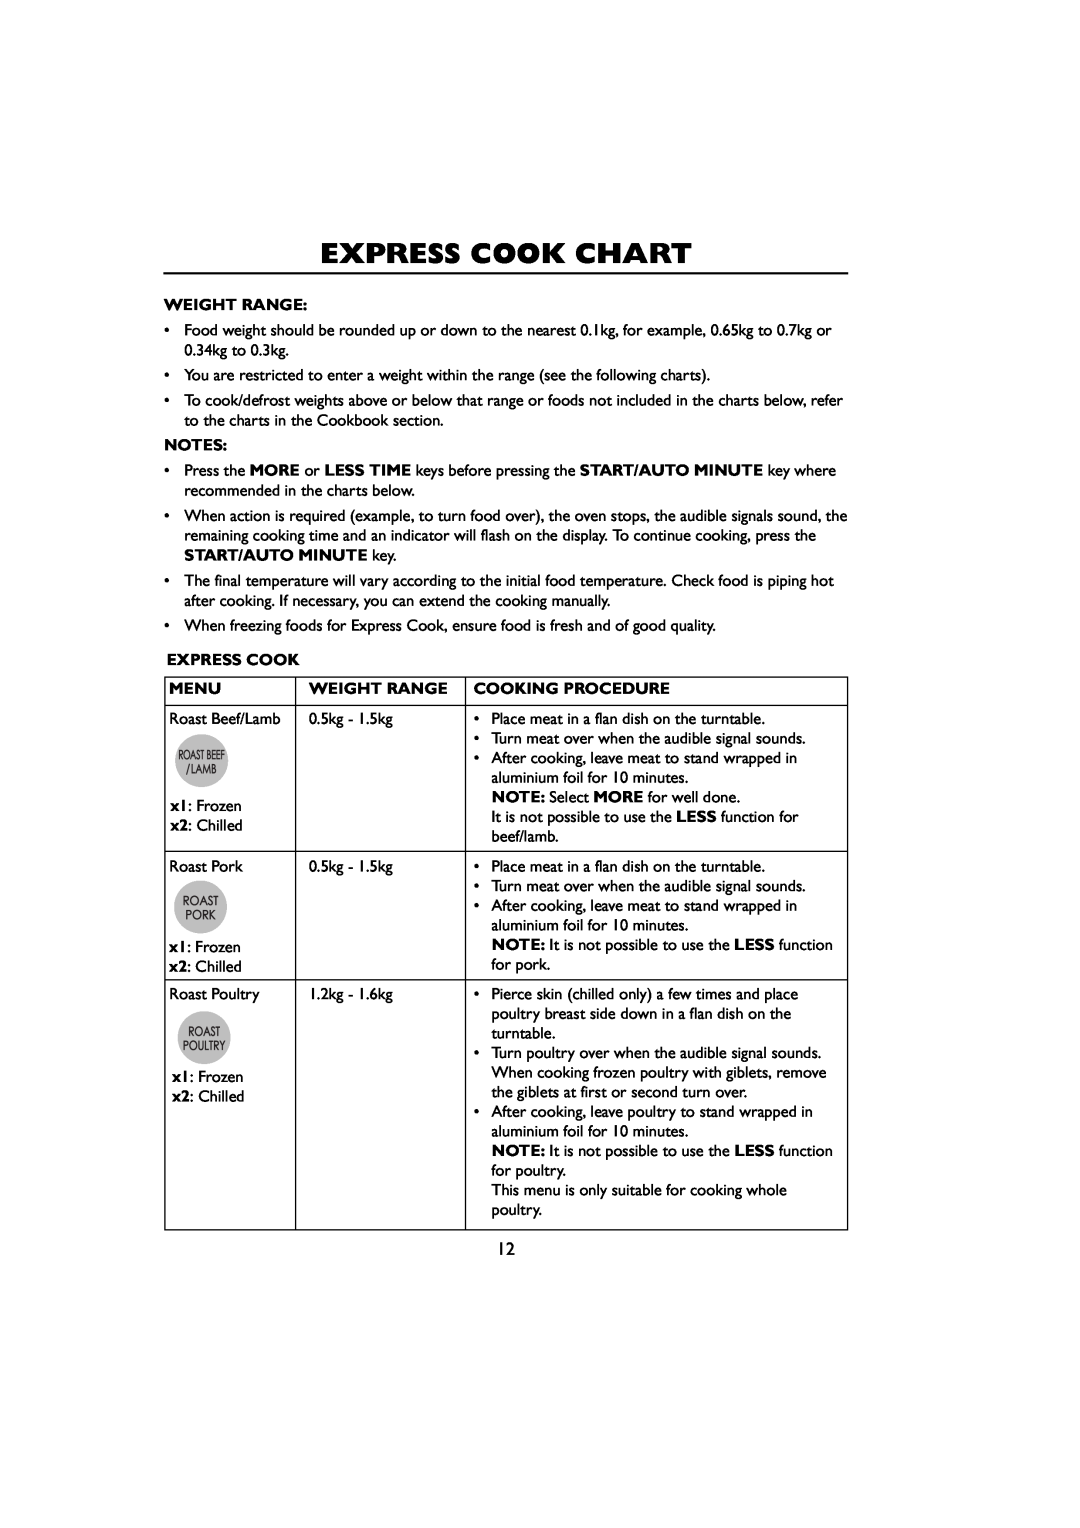 Sharp R-259 operation manual Express Cook Chart, Weight Range, Menu, Cooking Procedure 